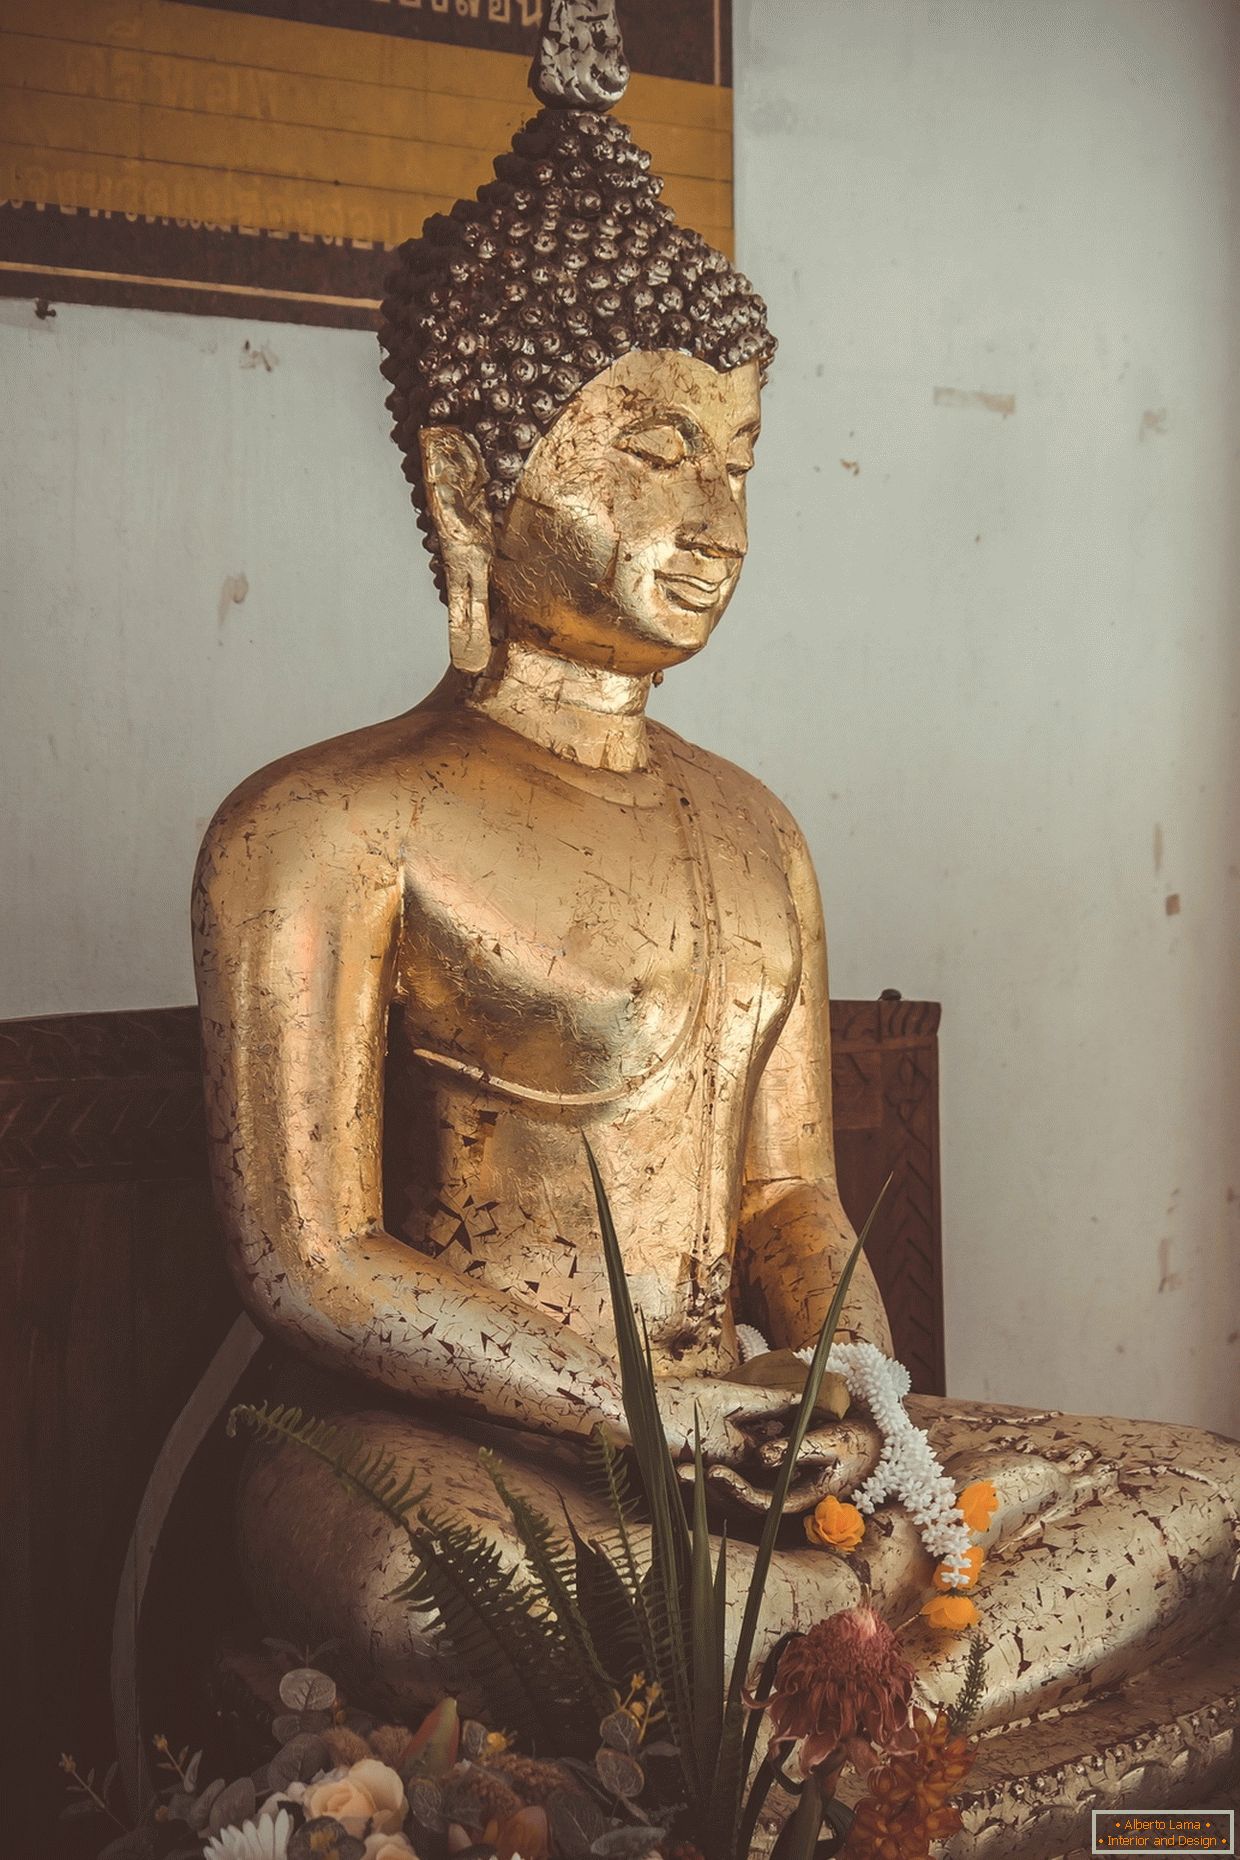 Der goldene Buddha